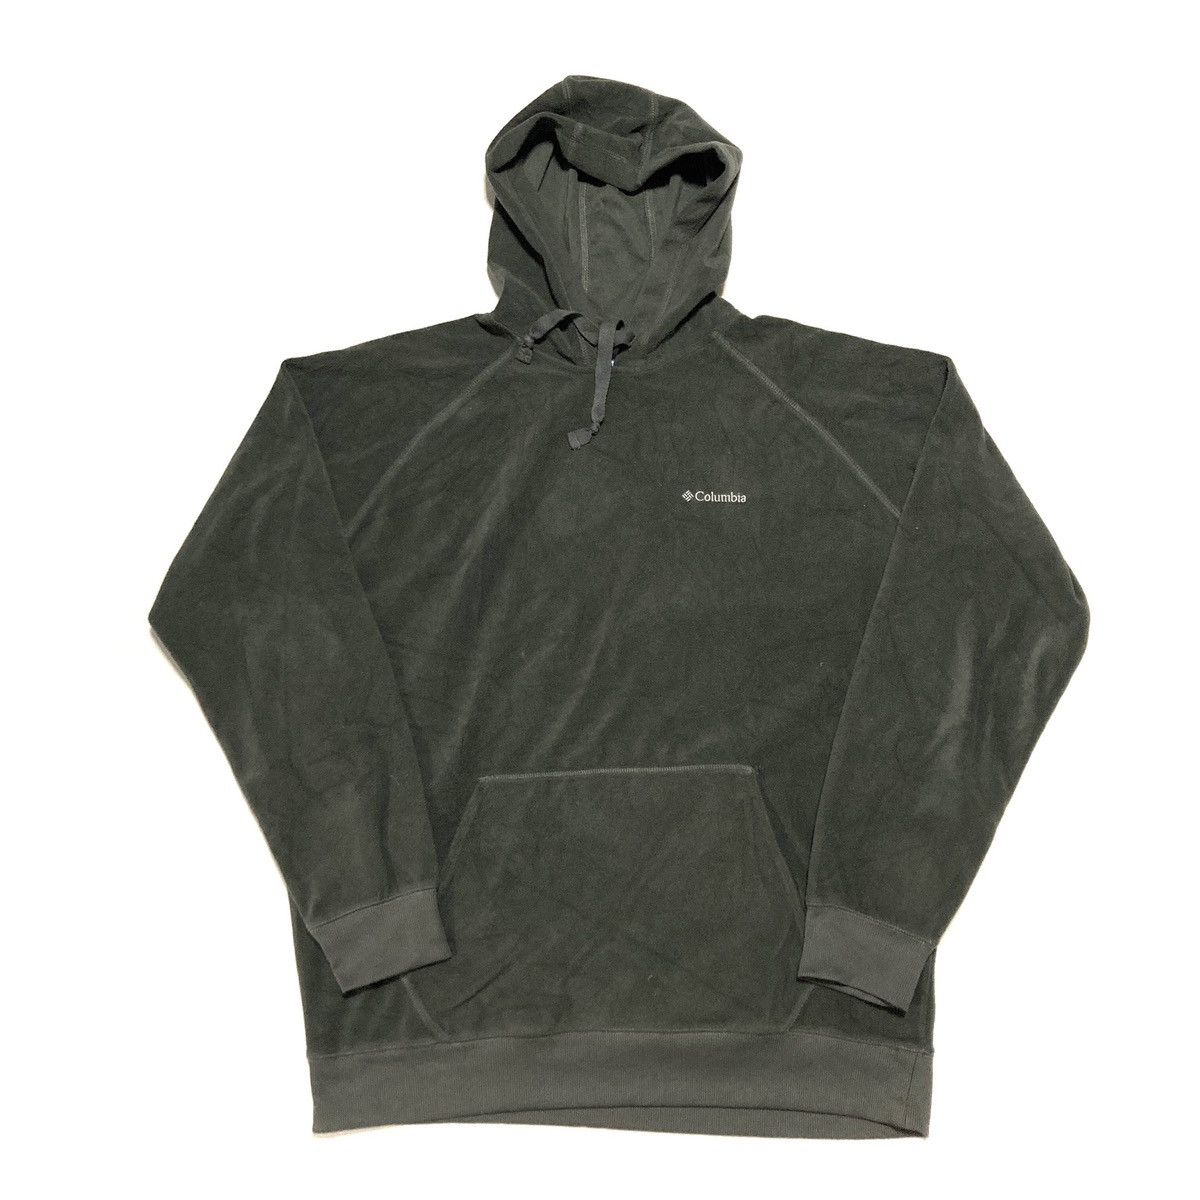 Columbia Columbia Sportswear Company grey fleece hoodie Size US XL / EU 56 / 4 - 1 Preview